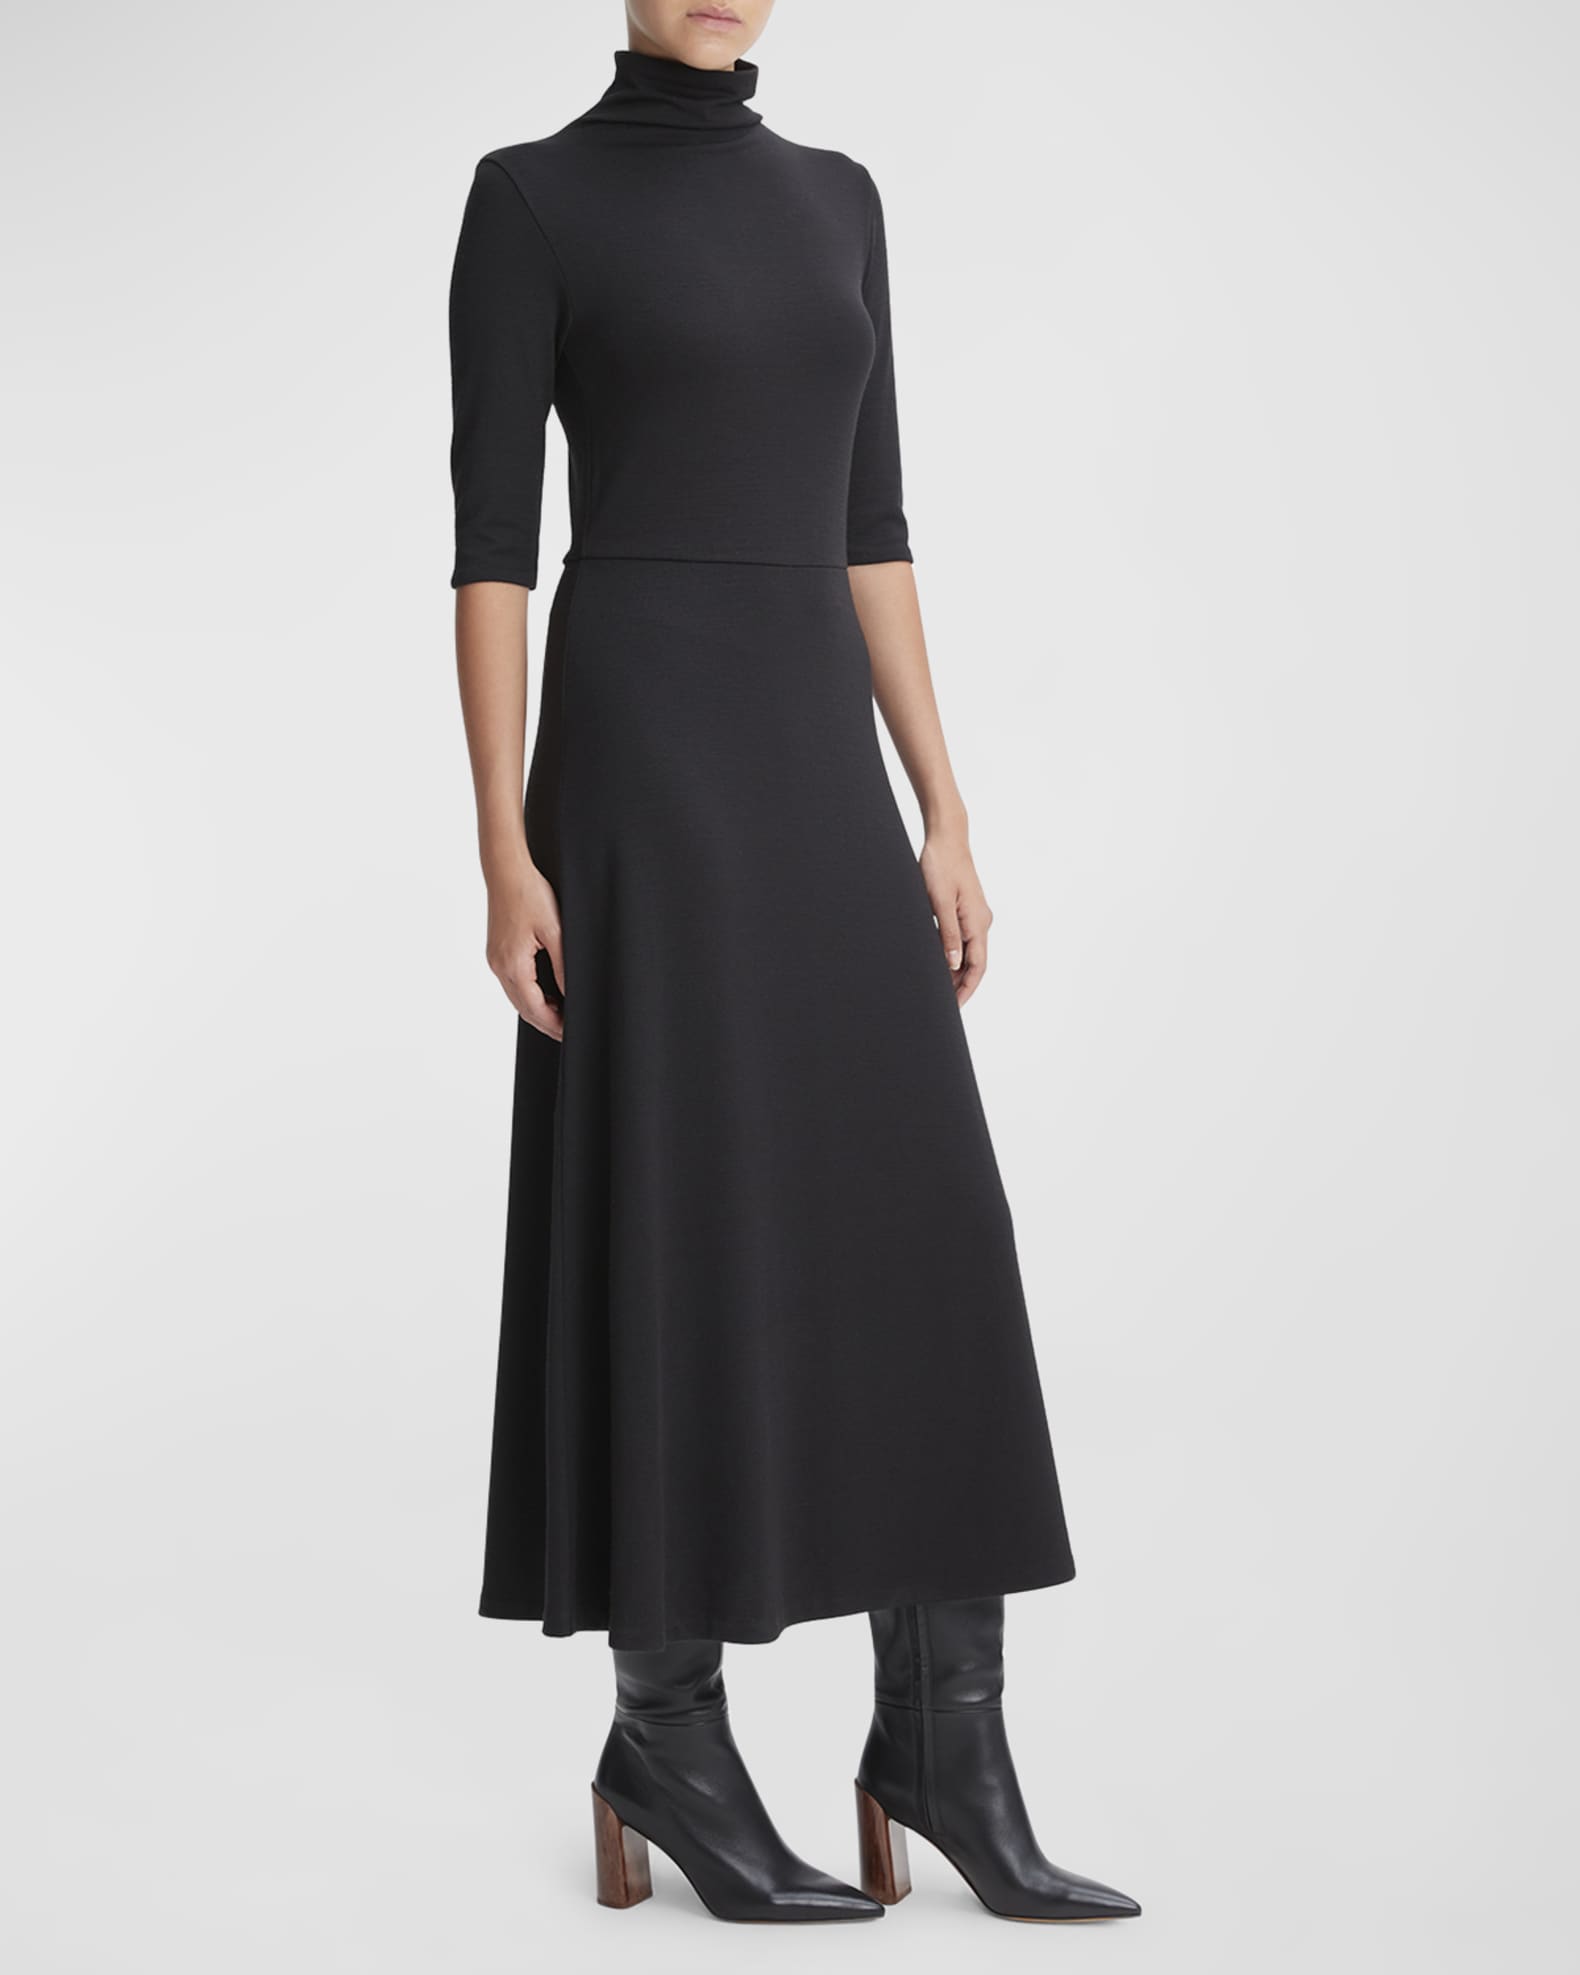 Louis Vuitton Wool Scarf - dress. Raleigh